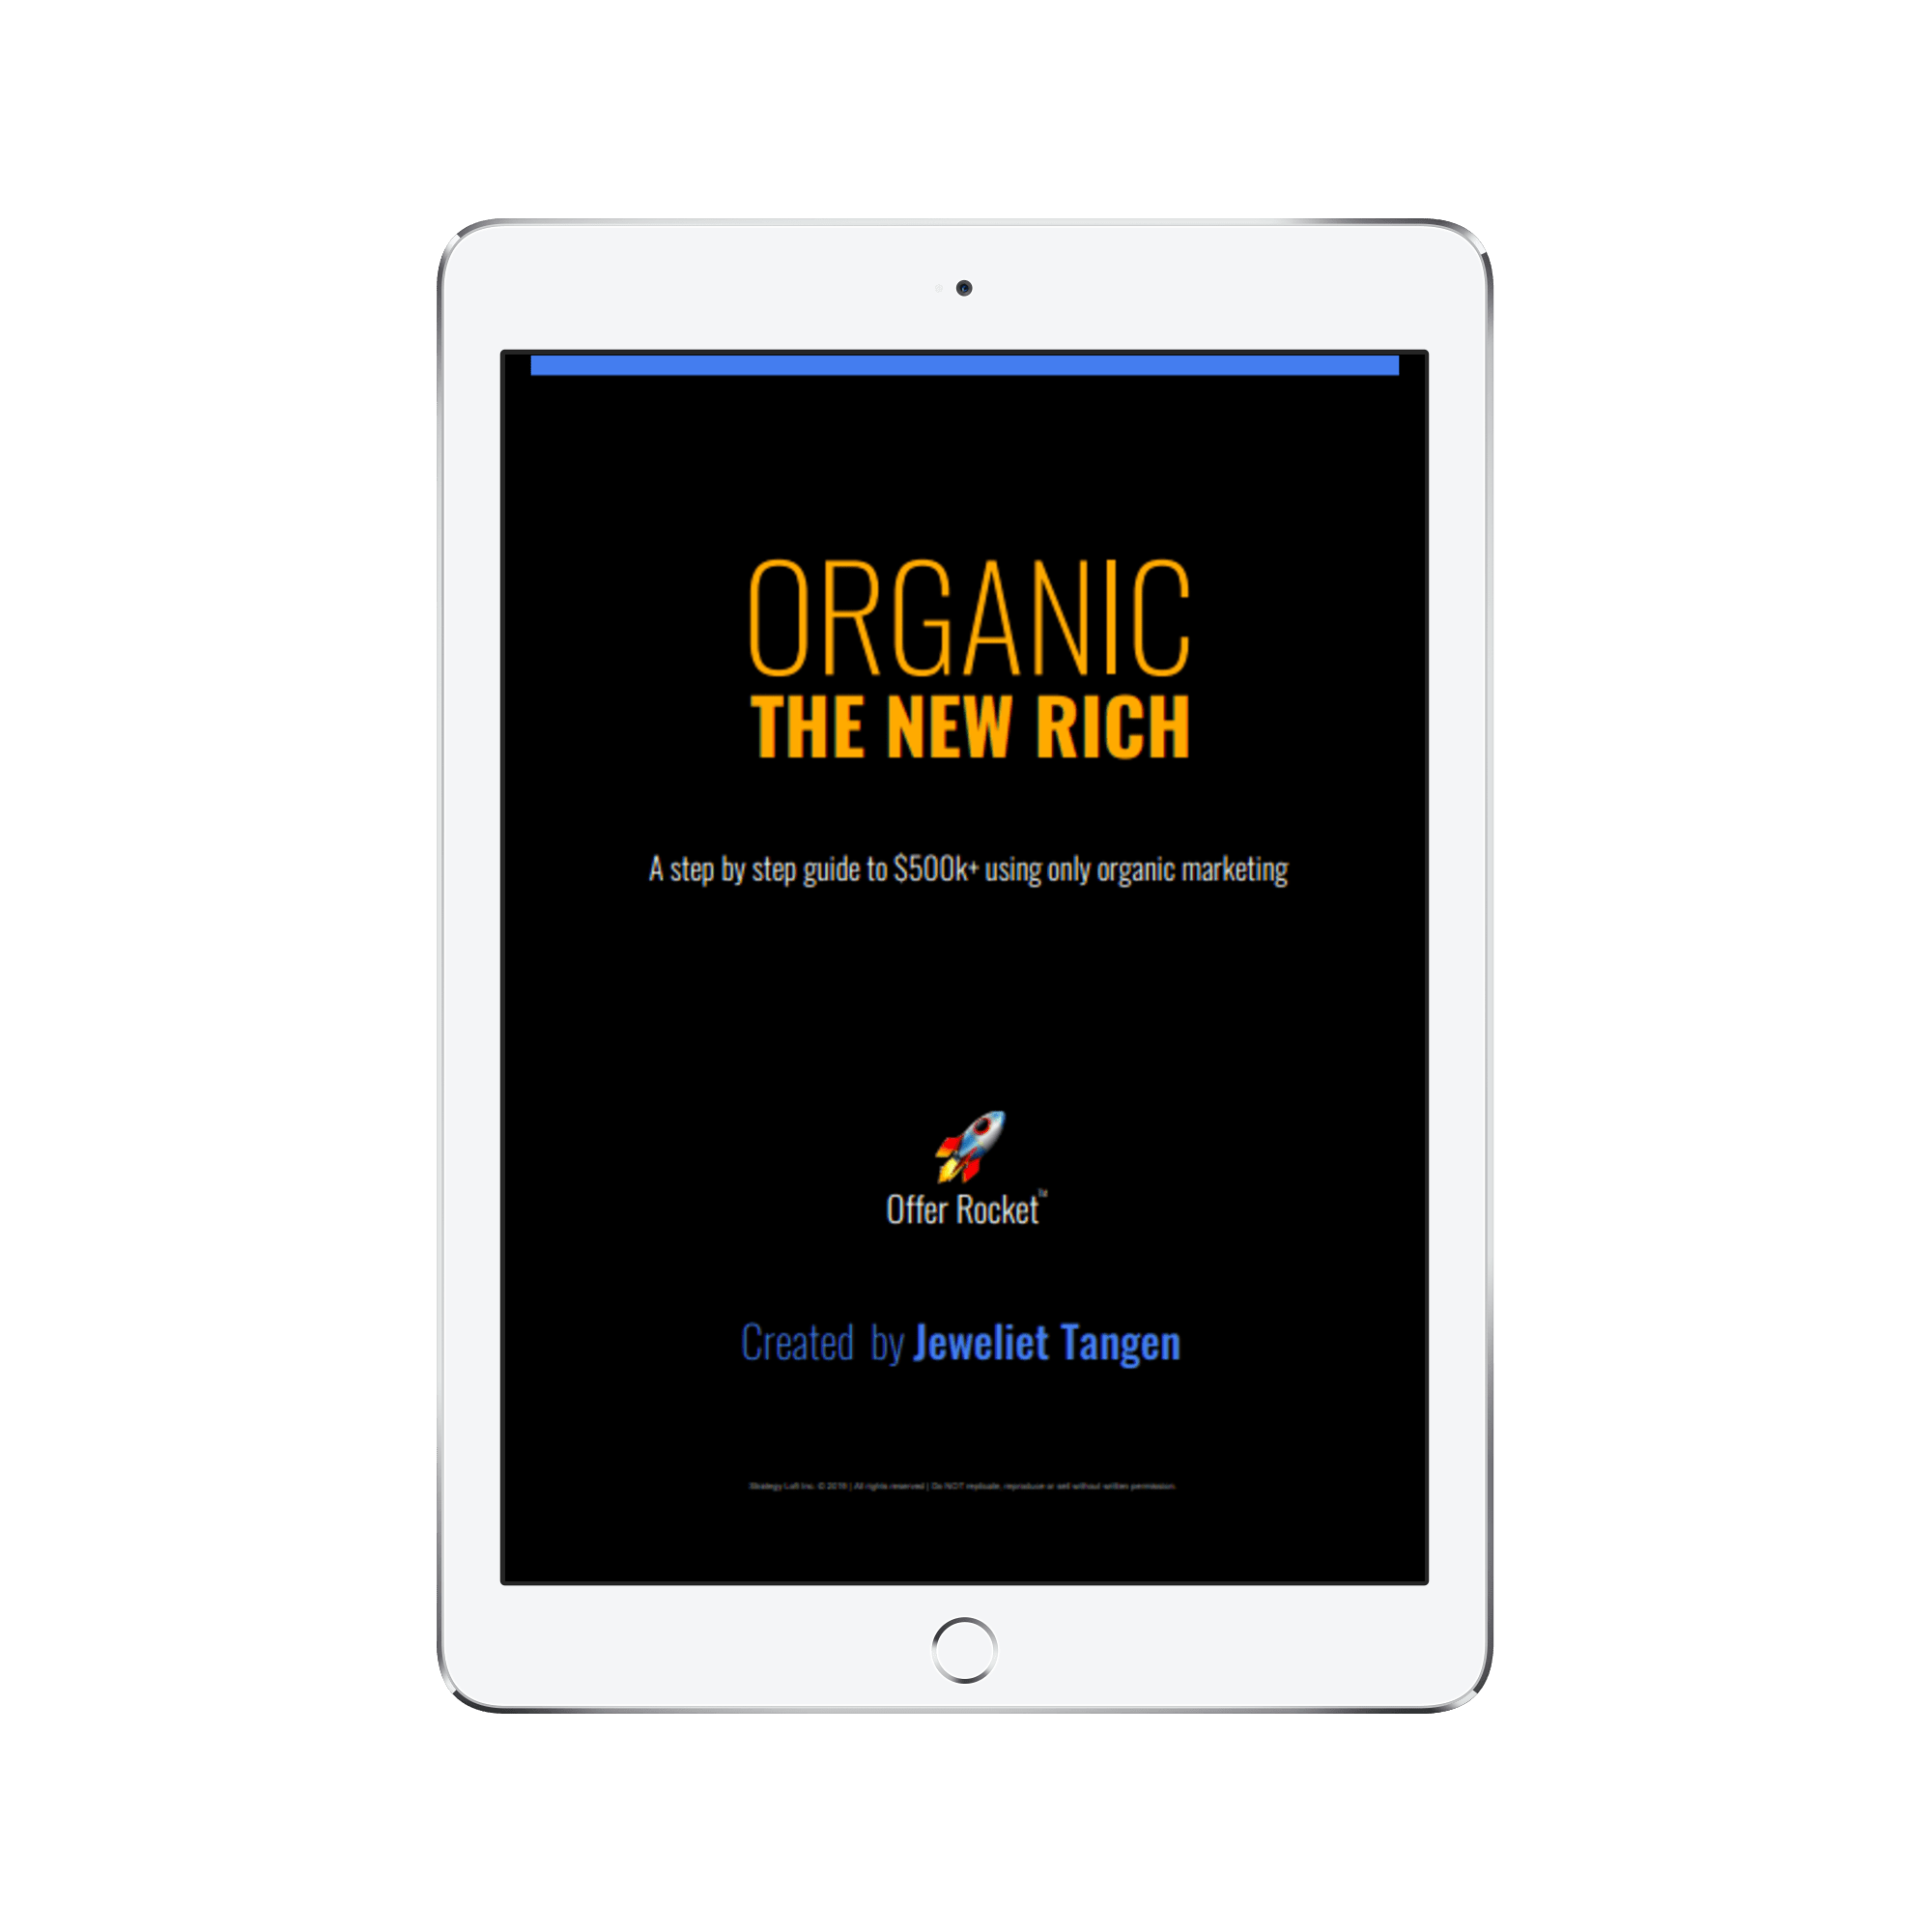 [GET] ORGANIC MARKETING 2.0 Download